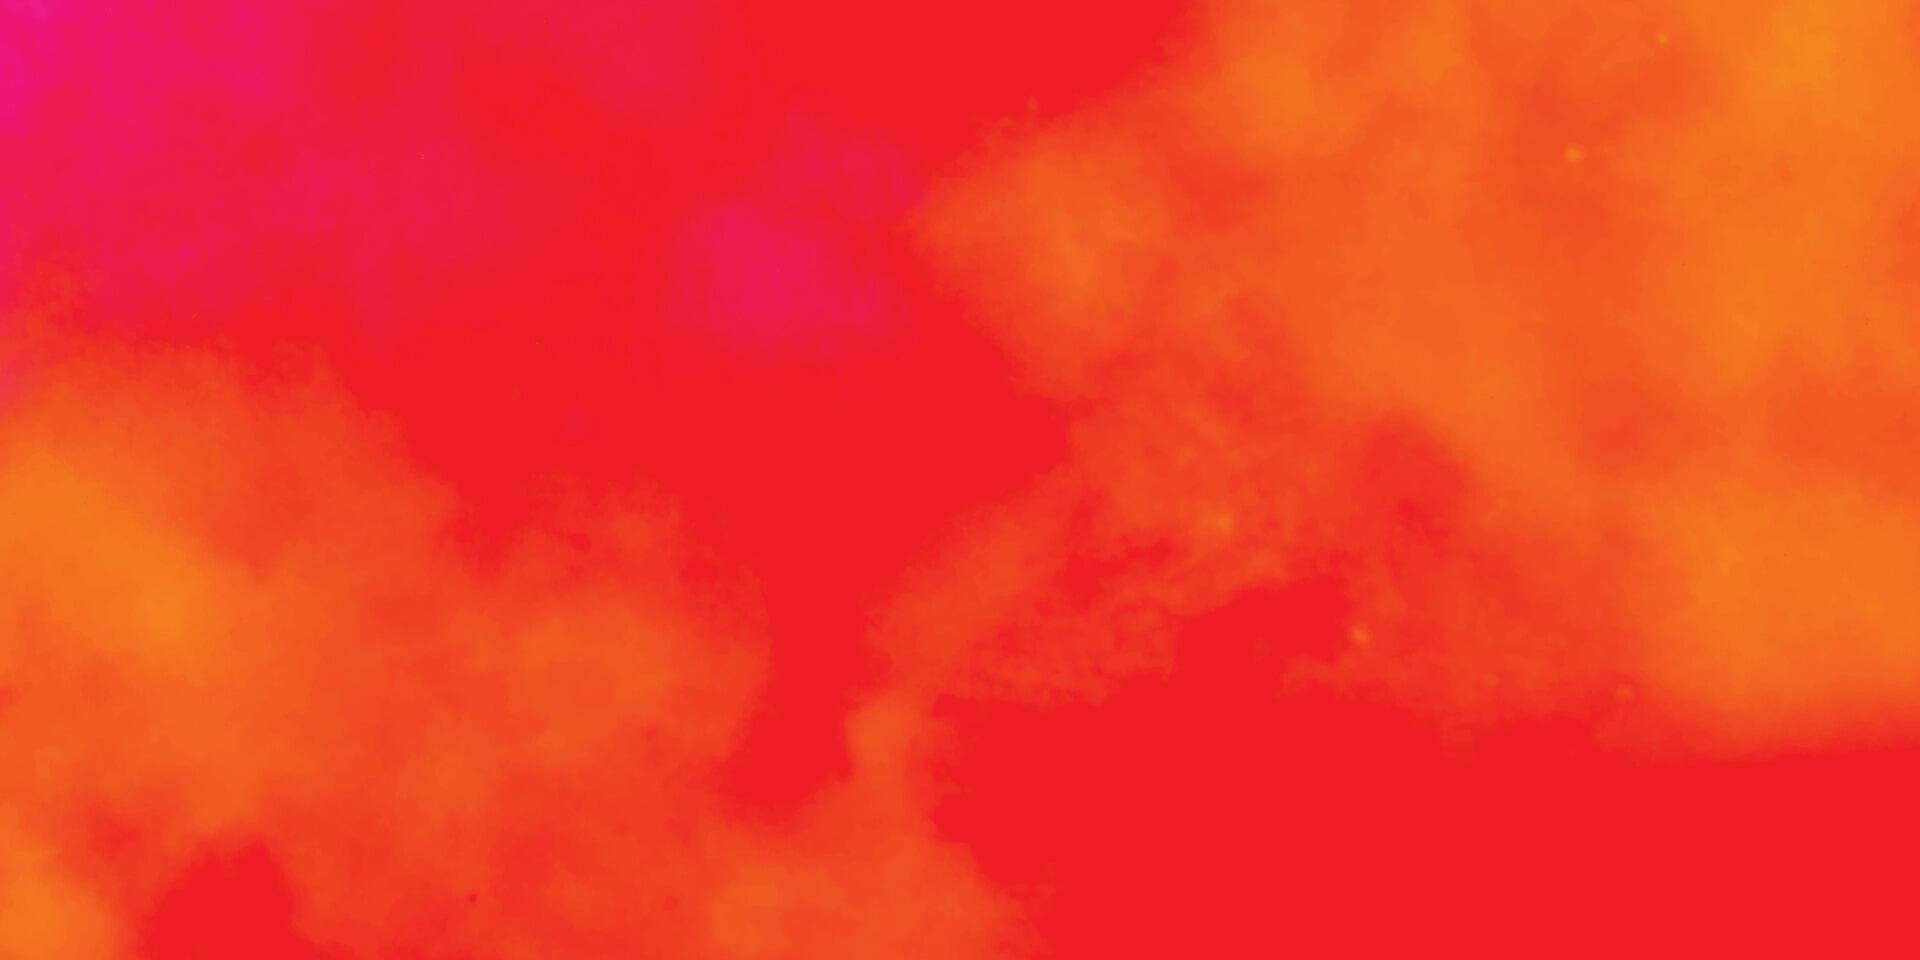 vattenfärg röd orange målad bakgrund. orange Sol moln bakgrund. röd och orange vattenfärg bakgrund. färgrik grunge textur vektor